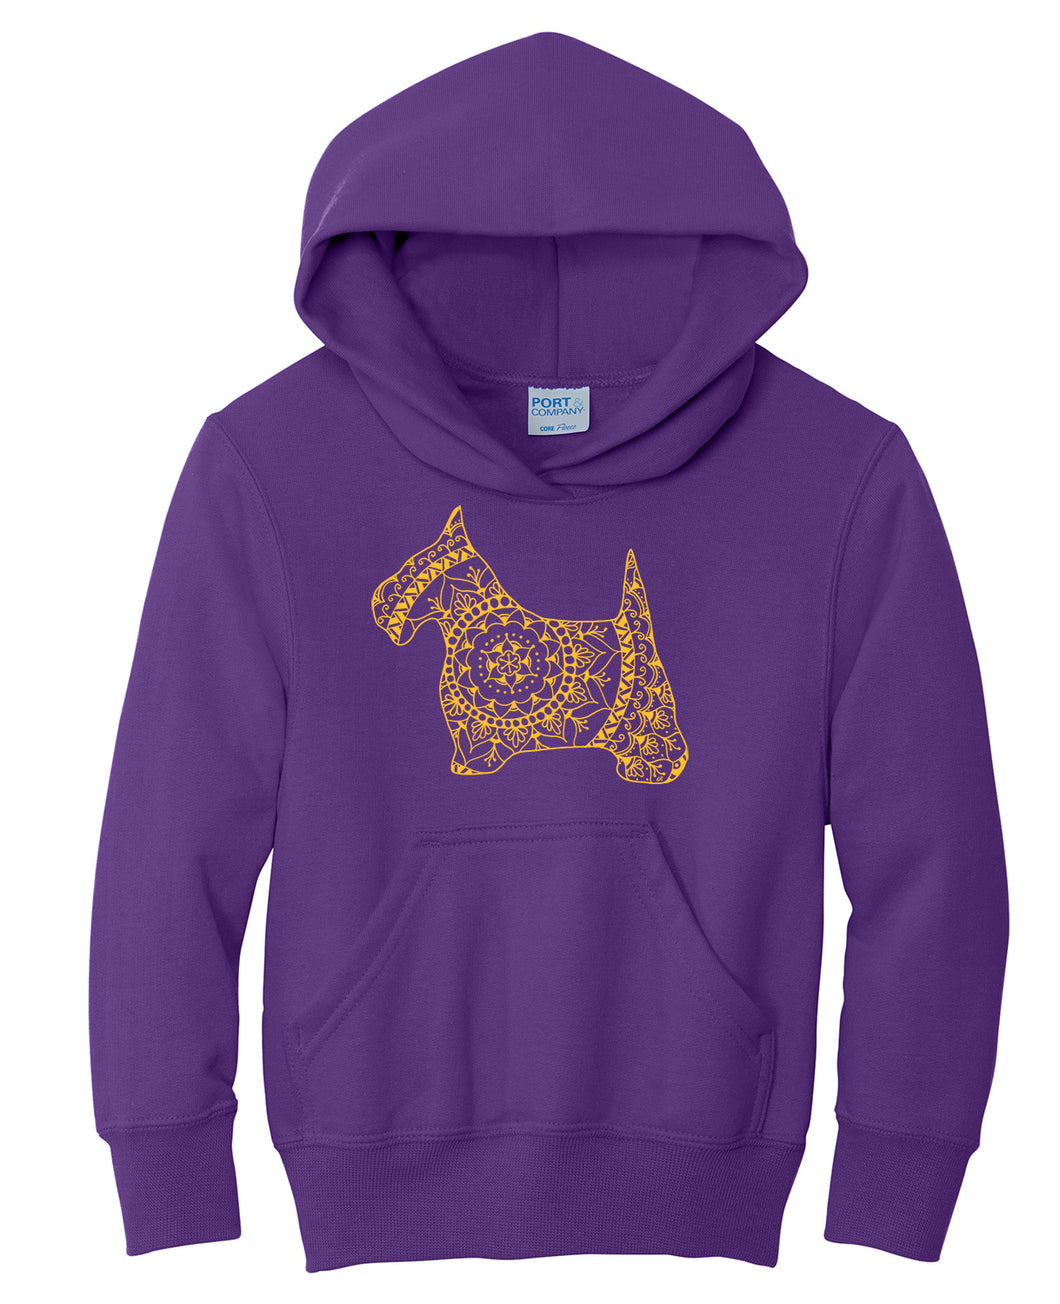 Product Image : Ballston Spa Scotty Youth Hooded Sweatshirt  - Purple with Gold / Yellow Scottie dog mandala design - Centered on front of sweatshirt